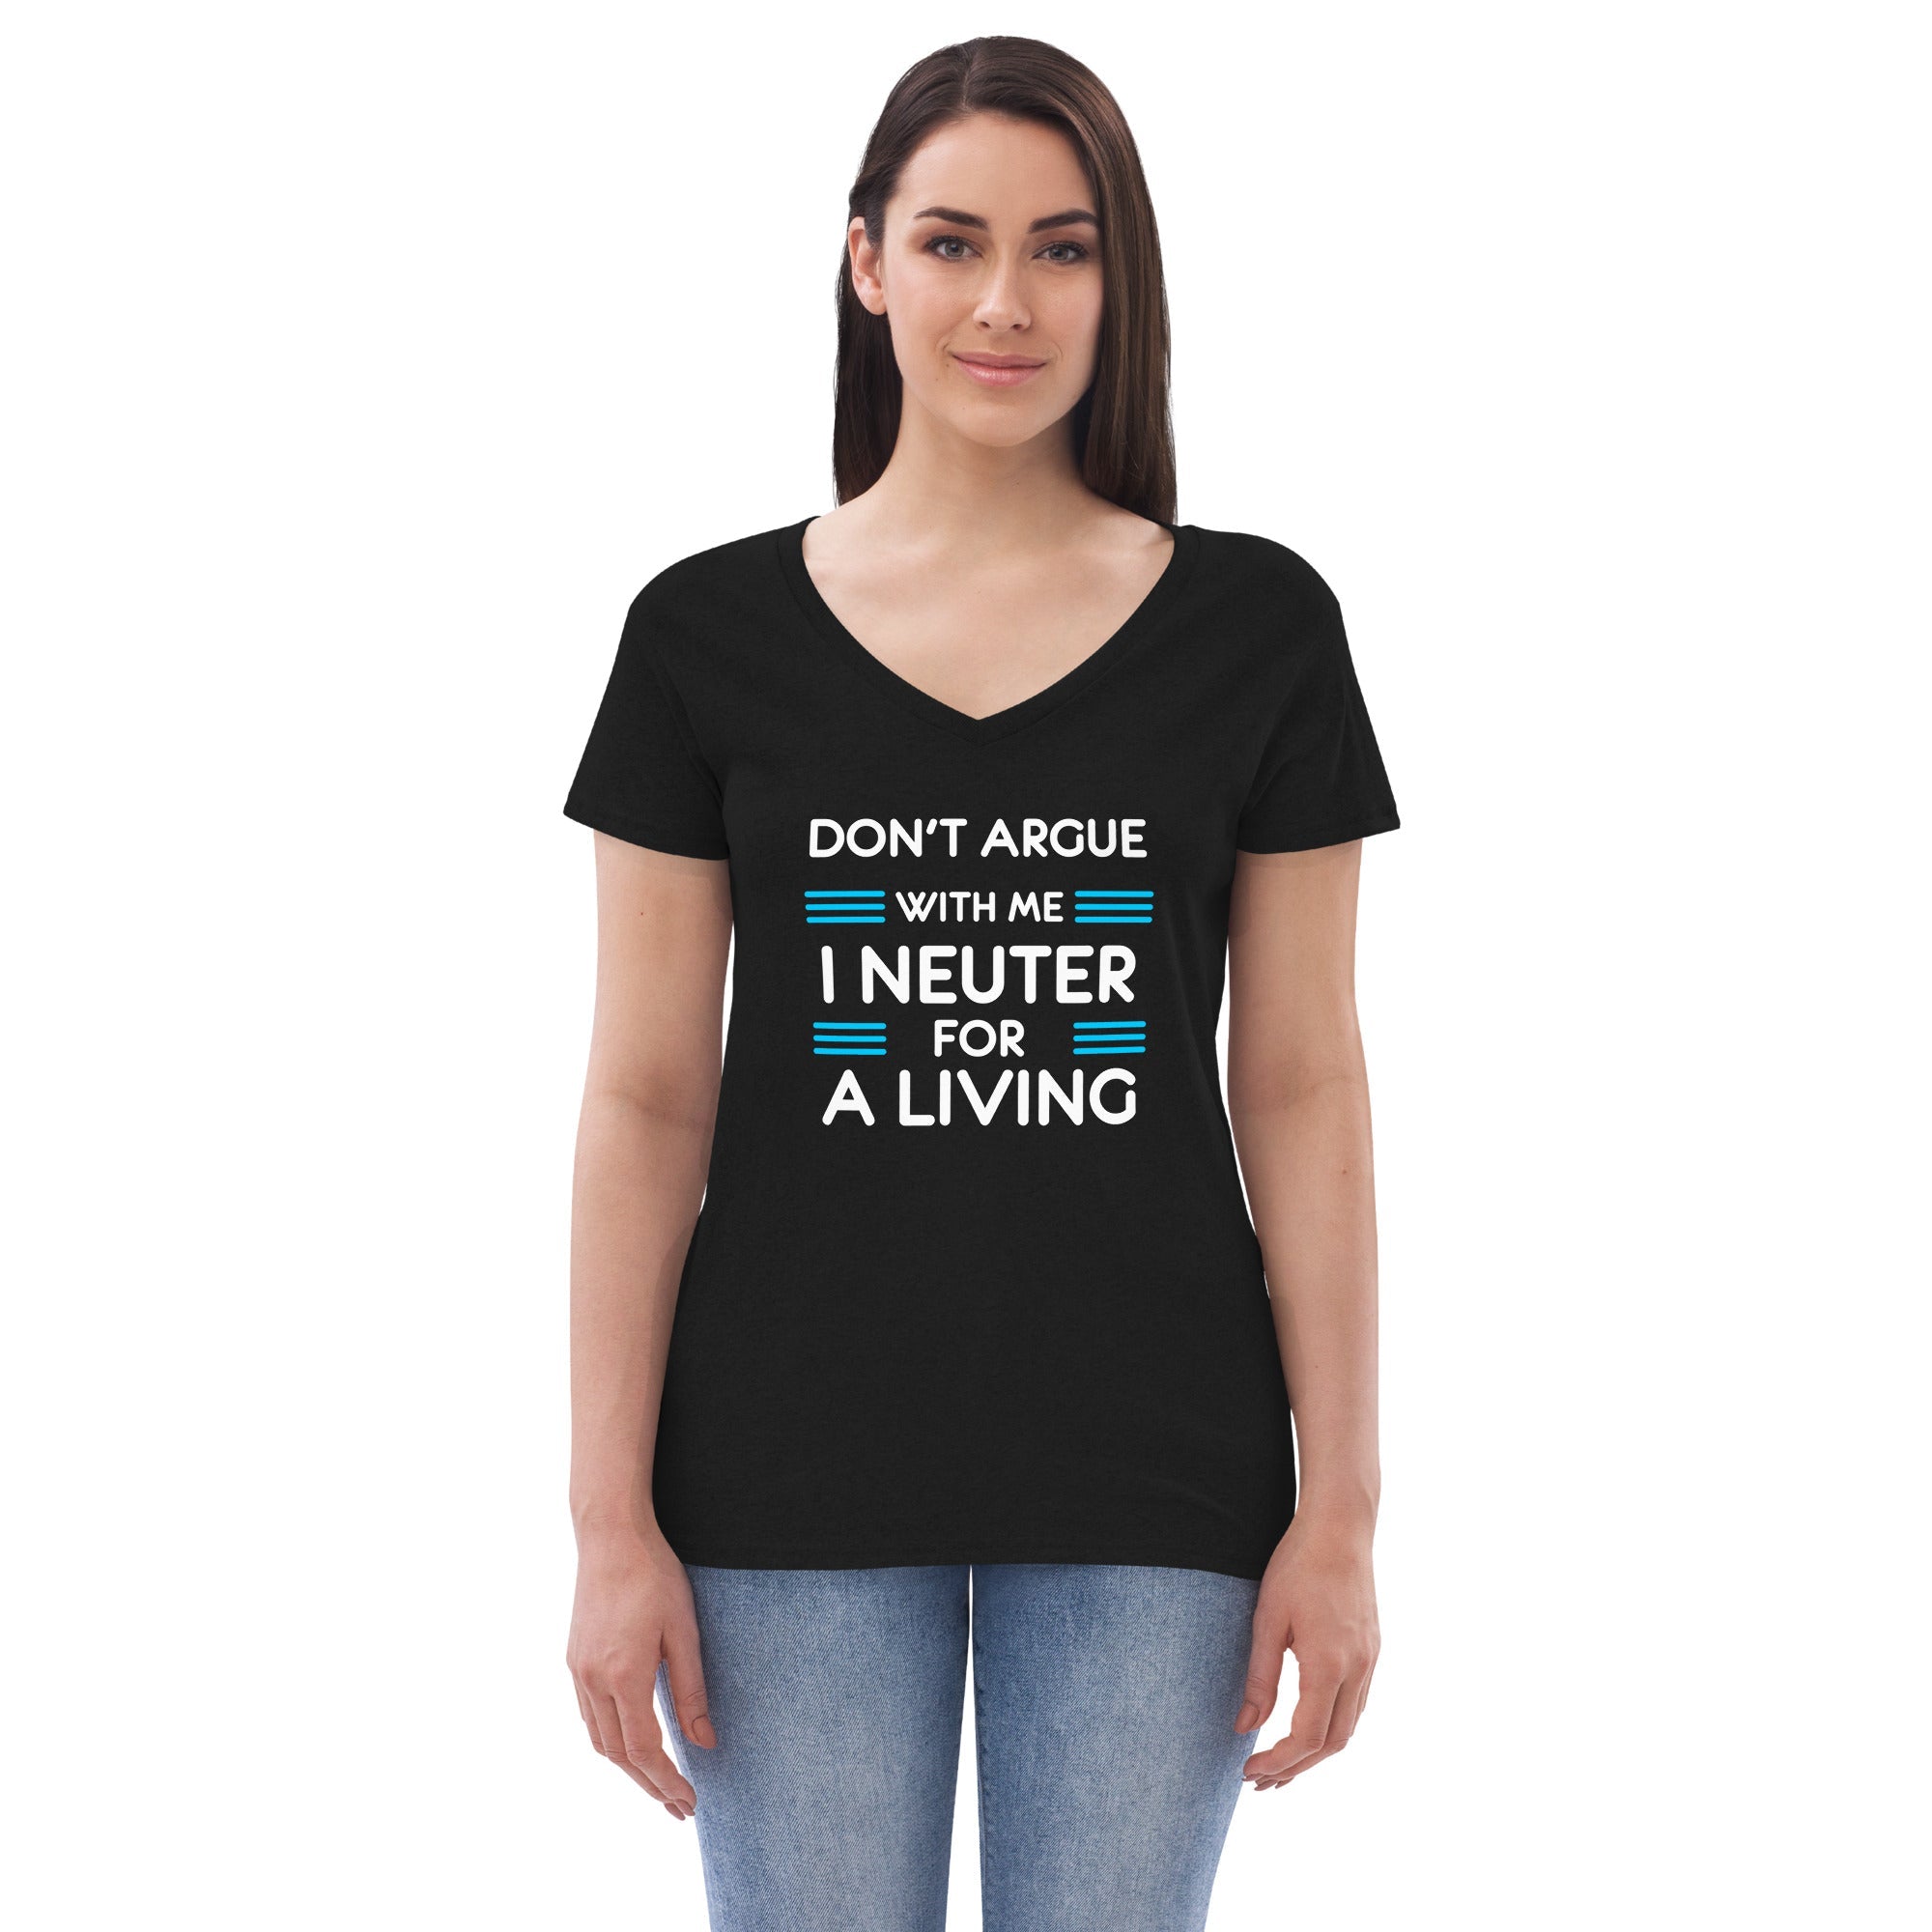 Don't argue with me I neuter for a living Women's V-Neck T-Shirt